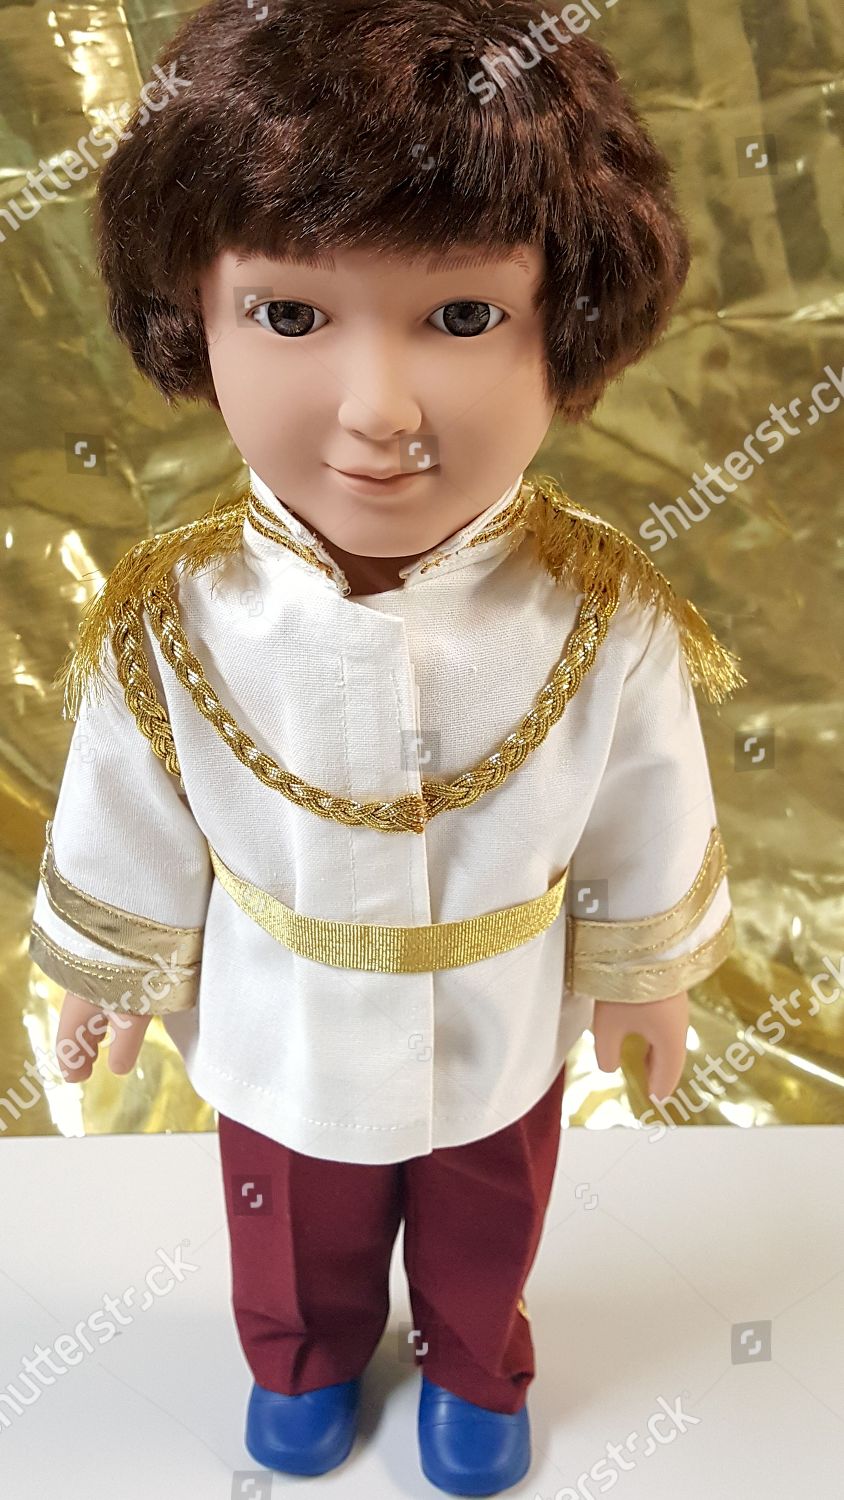 prince harry doll